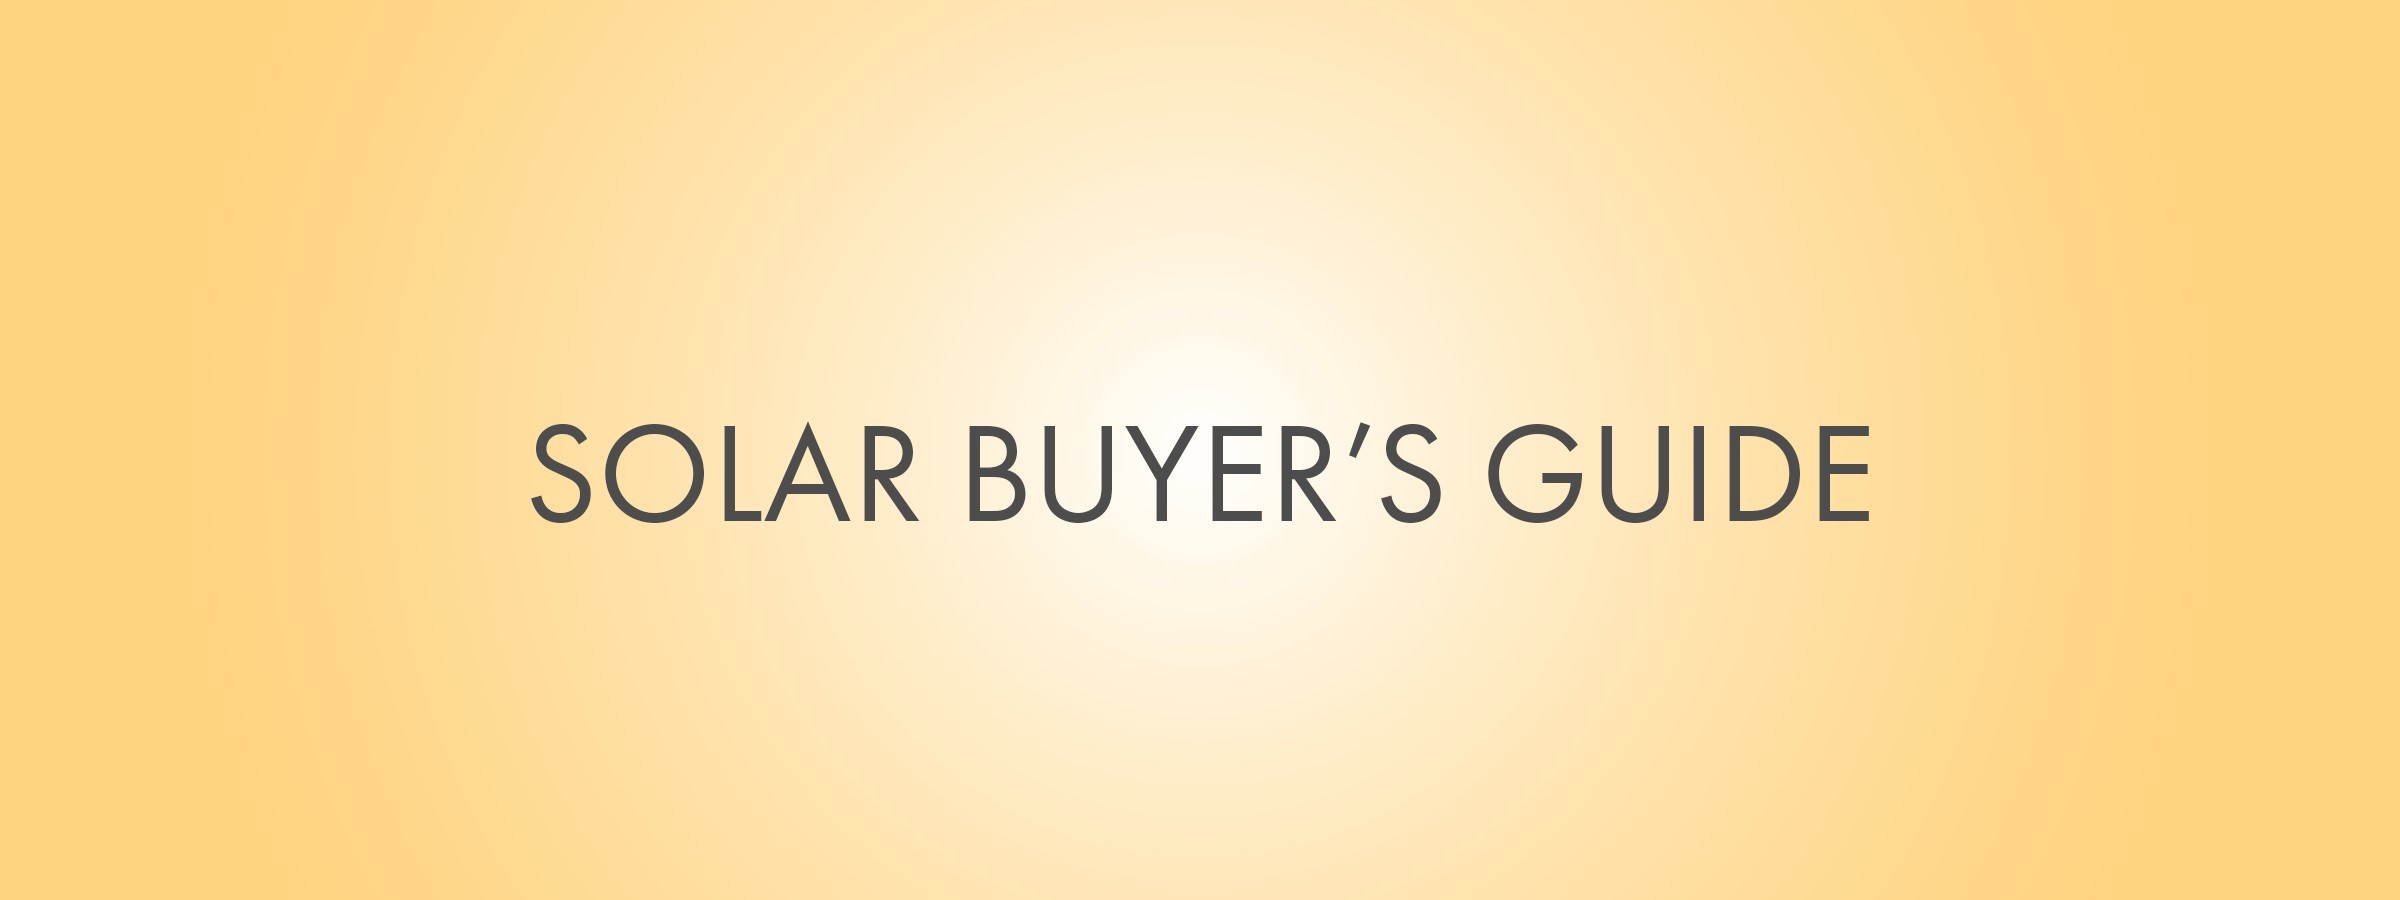 Downloadable Solar Buyer's Guide